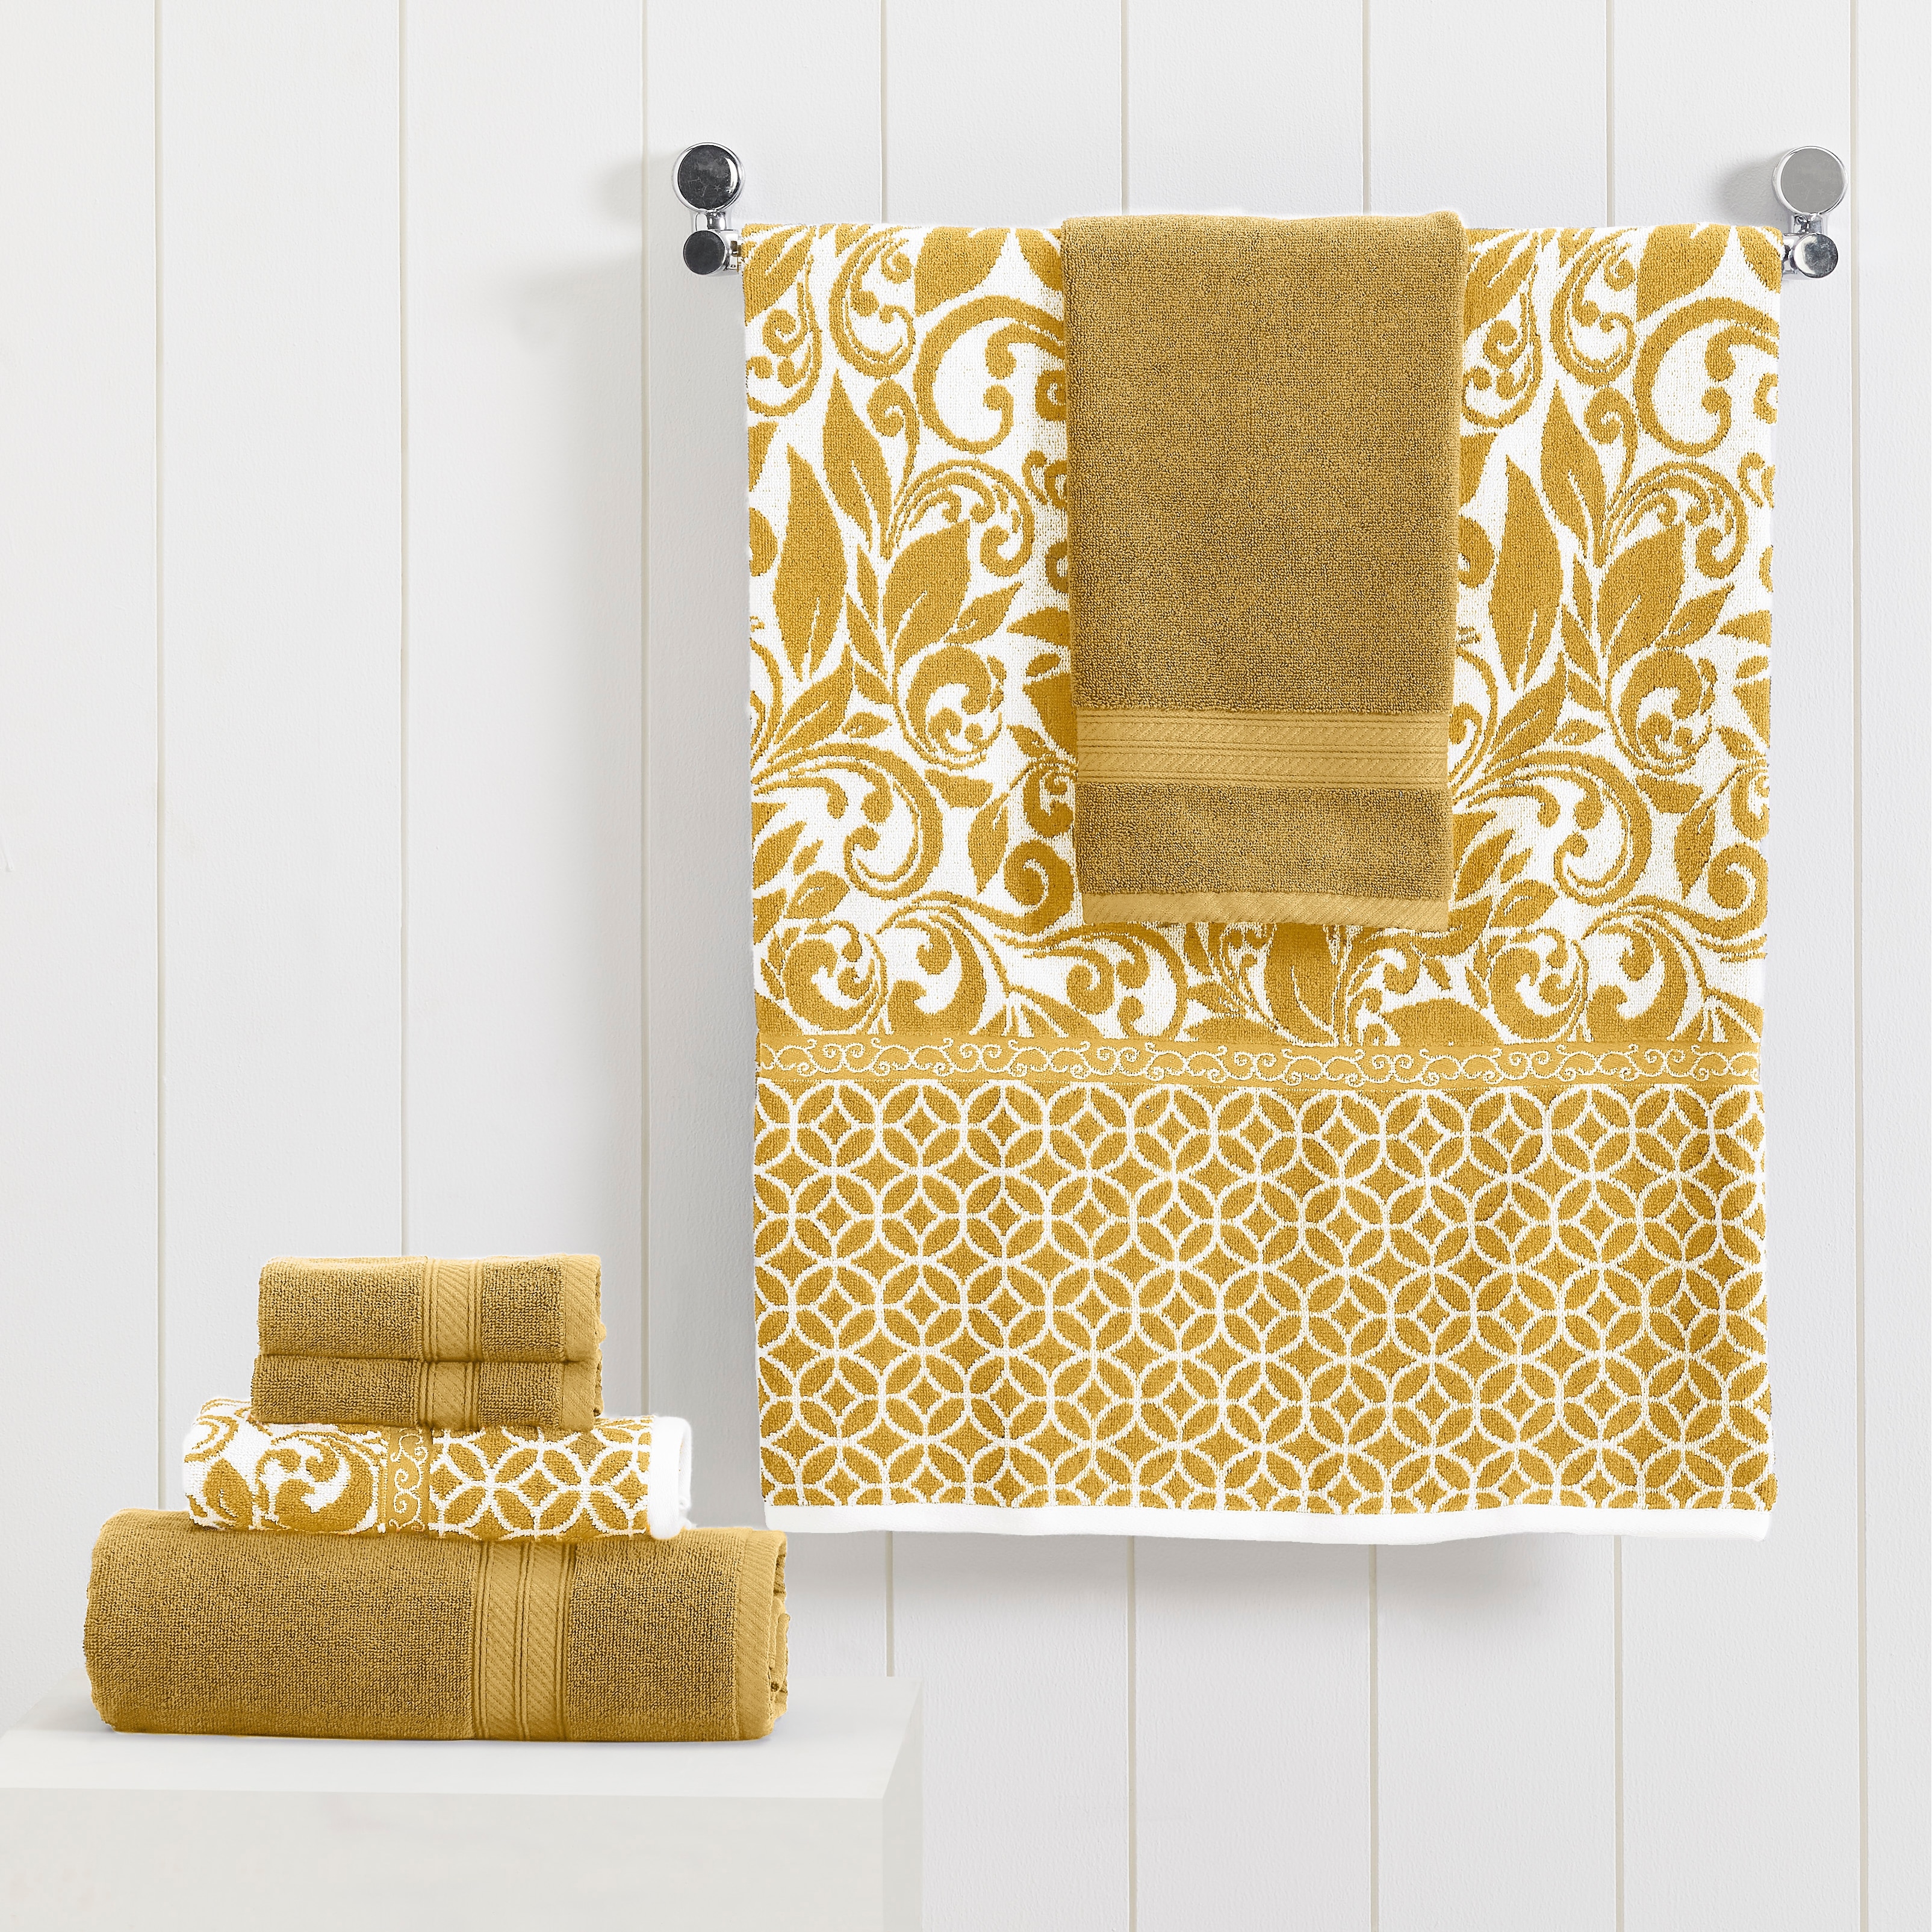 Golden Jewel Wholesale Bath Towels